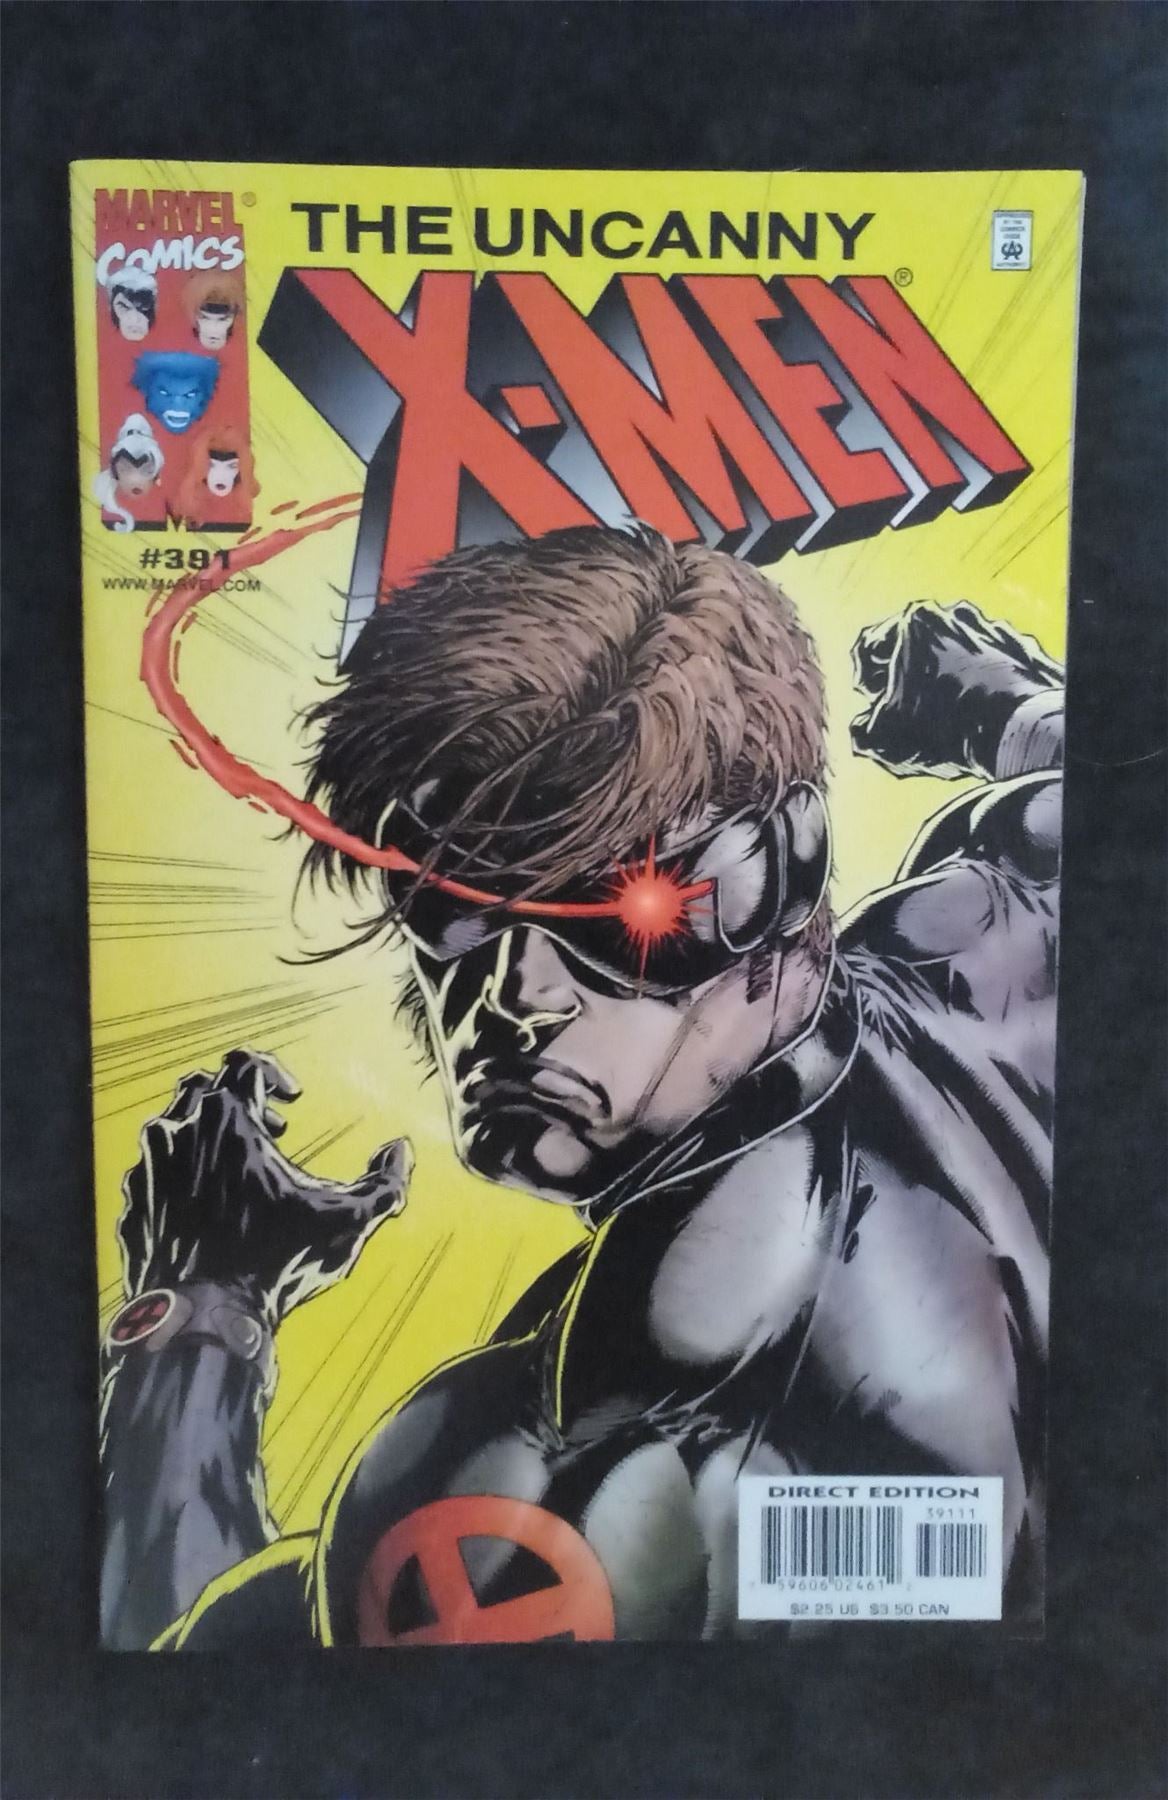 The Uncanny X-Men #391 2001 marvel Comic Book